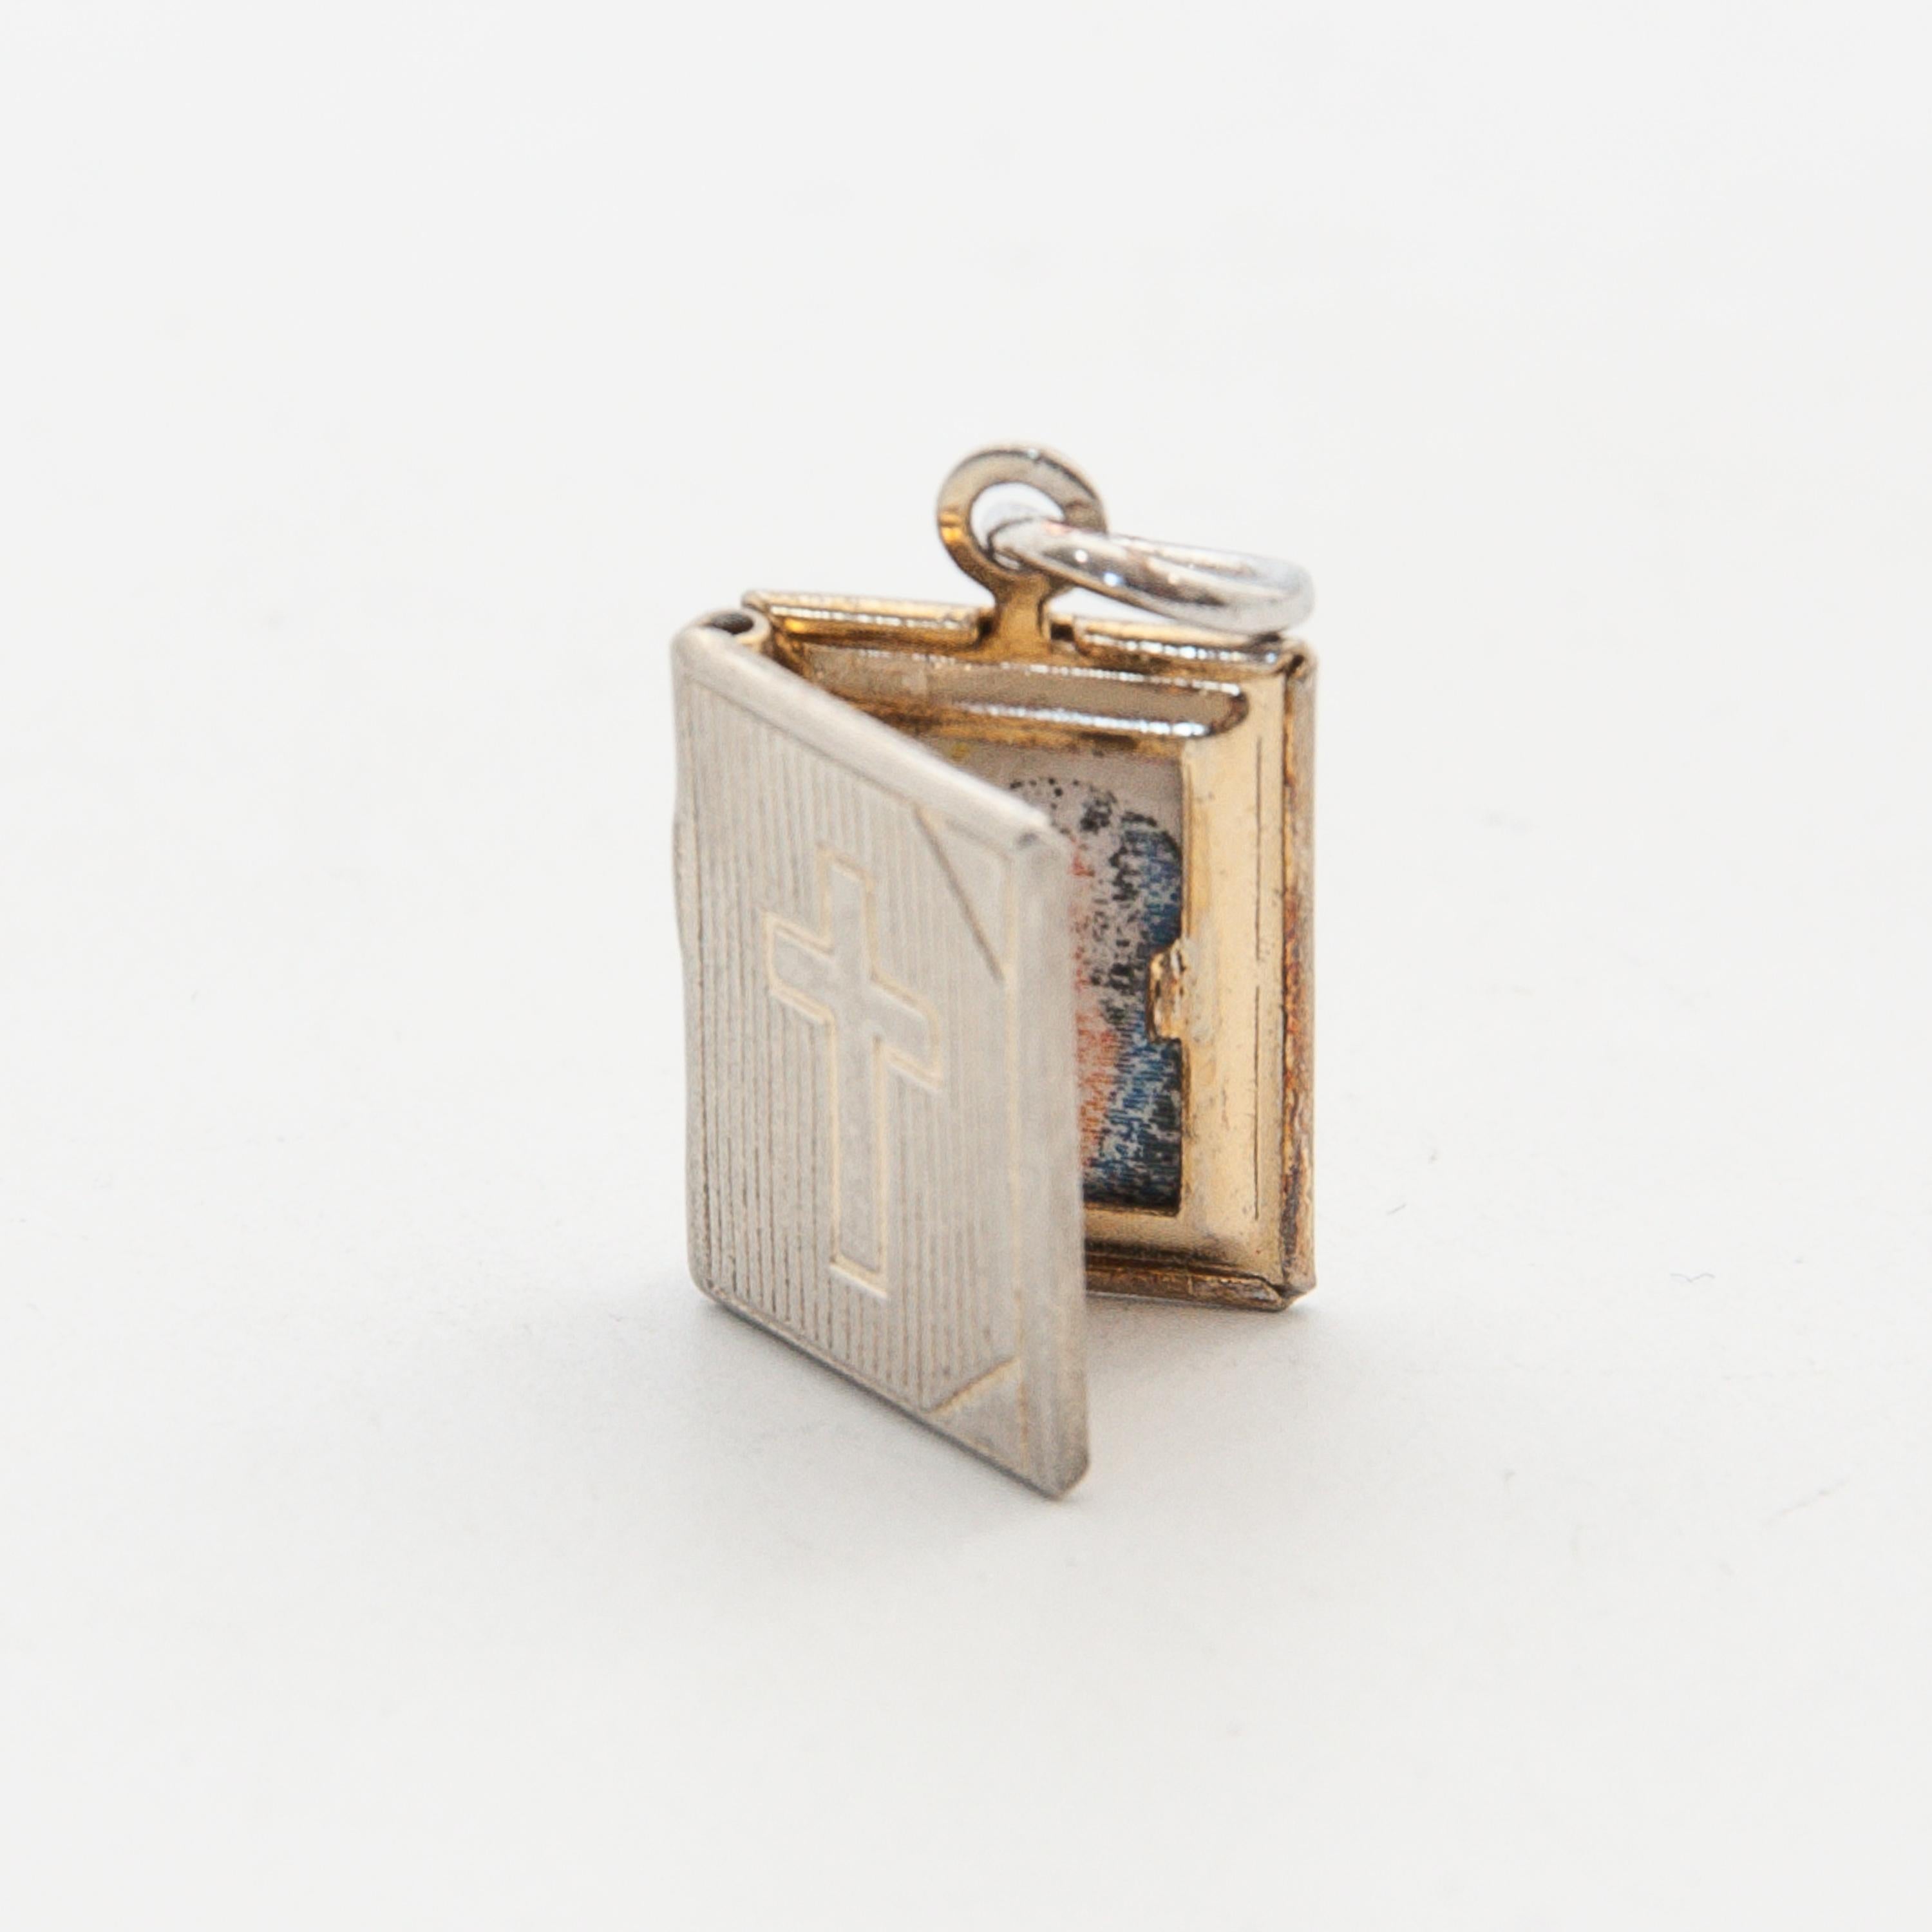 Women's or Men's Vintage Religious Miniature Book Locket Charm Pendant